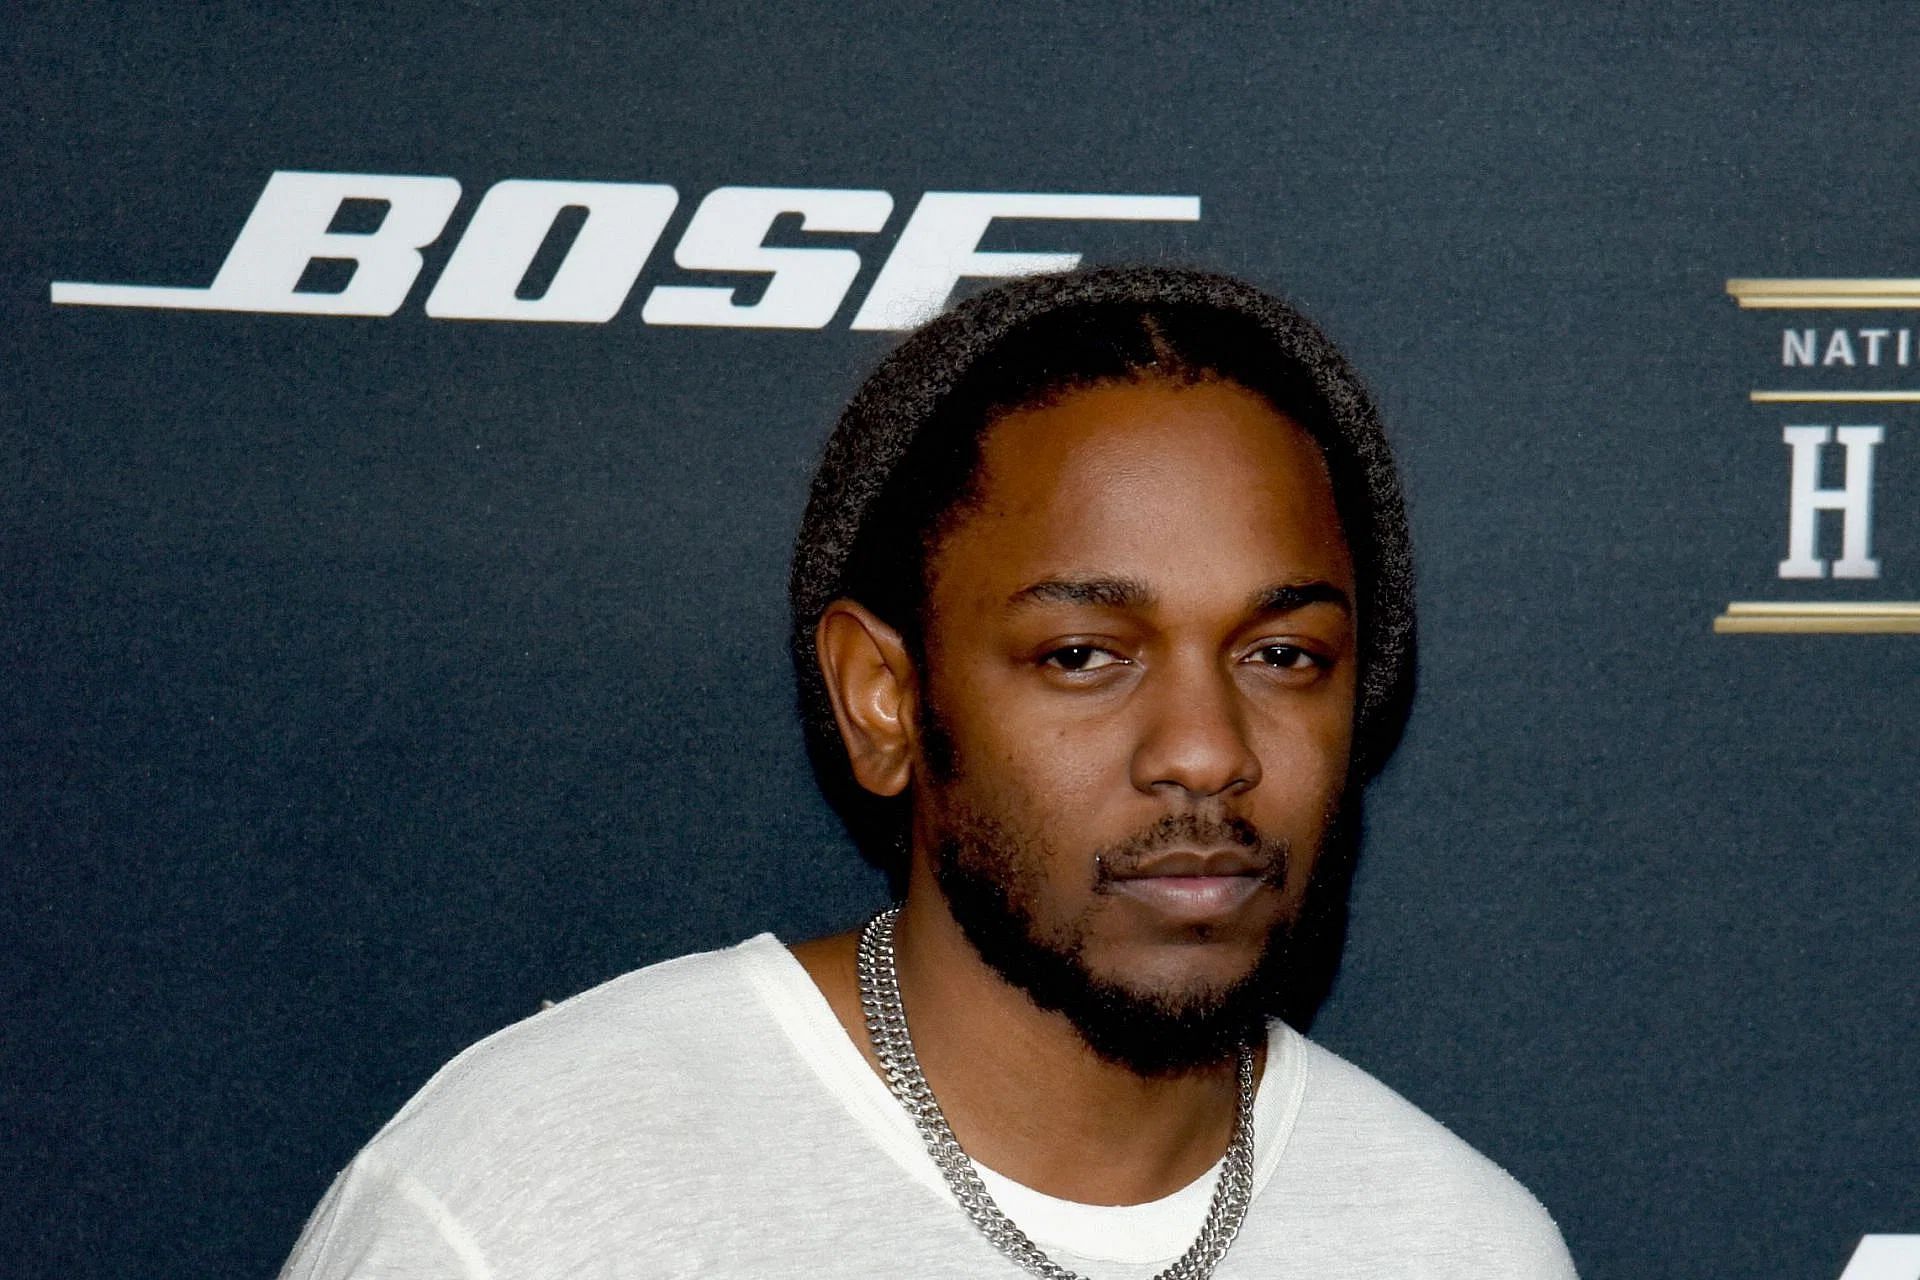 Super Bowl LVI: Kendrick Lamar Honors Dr. Dre During Halftime Show